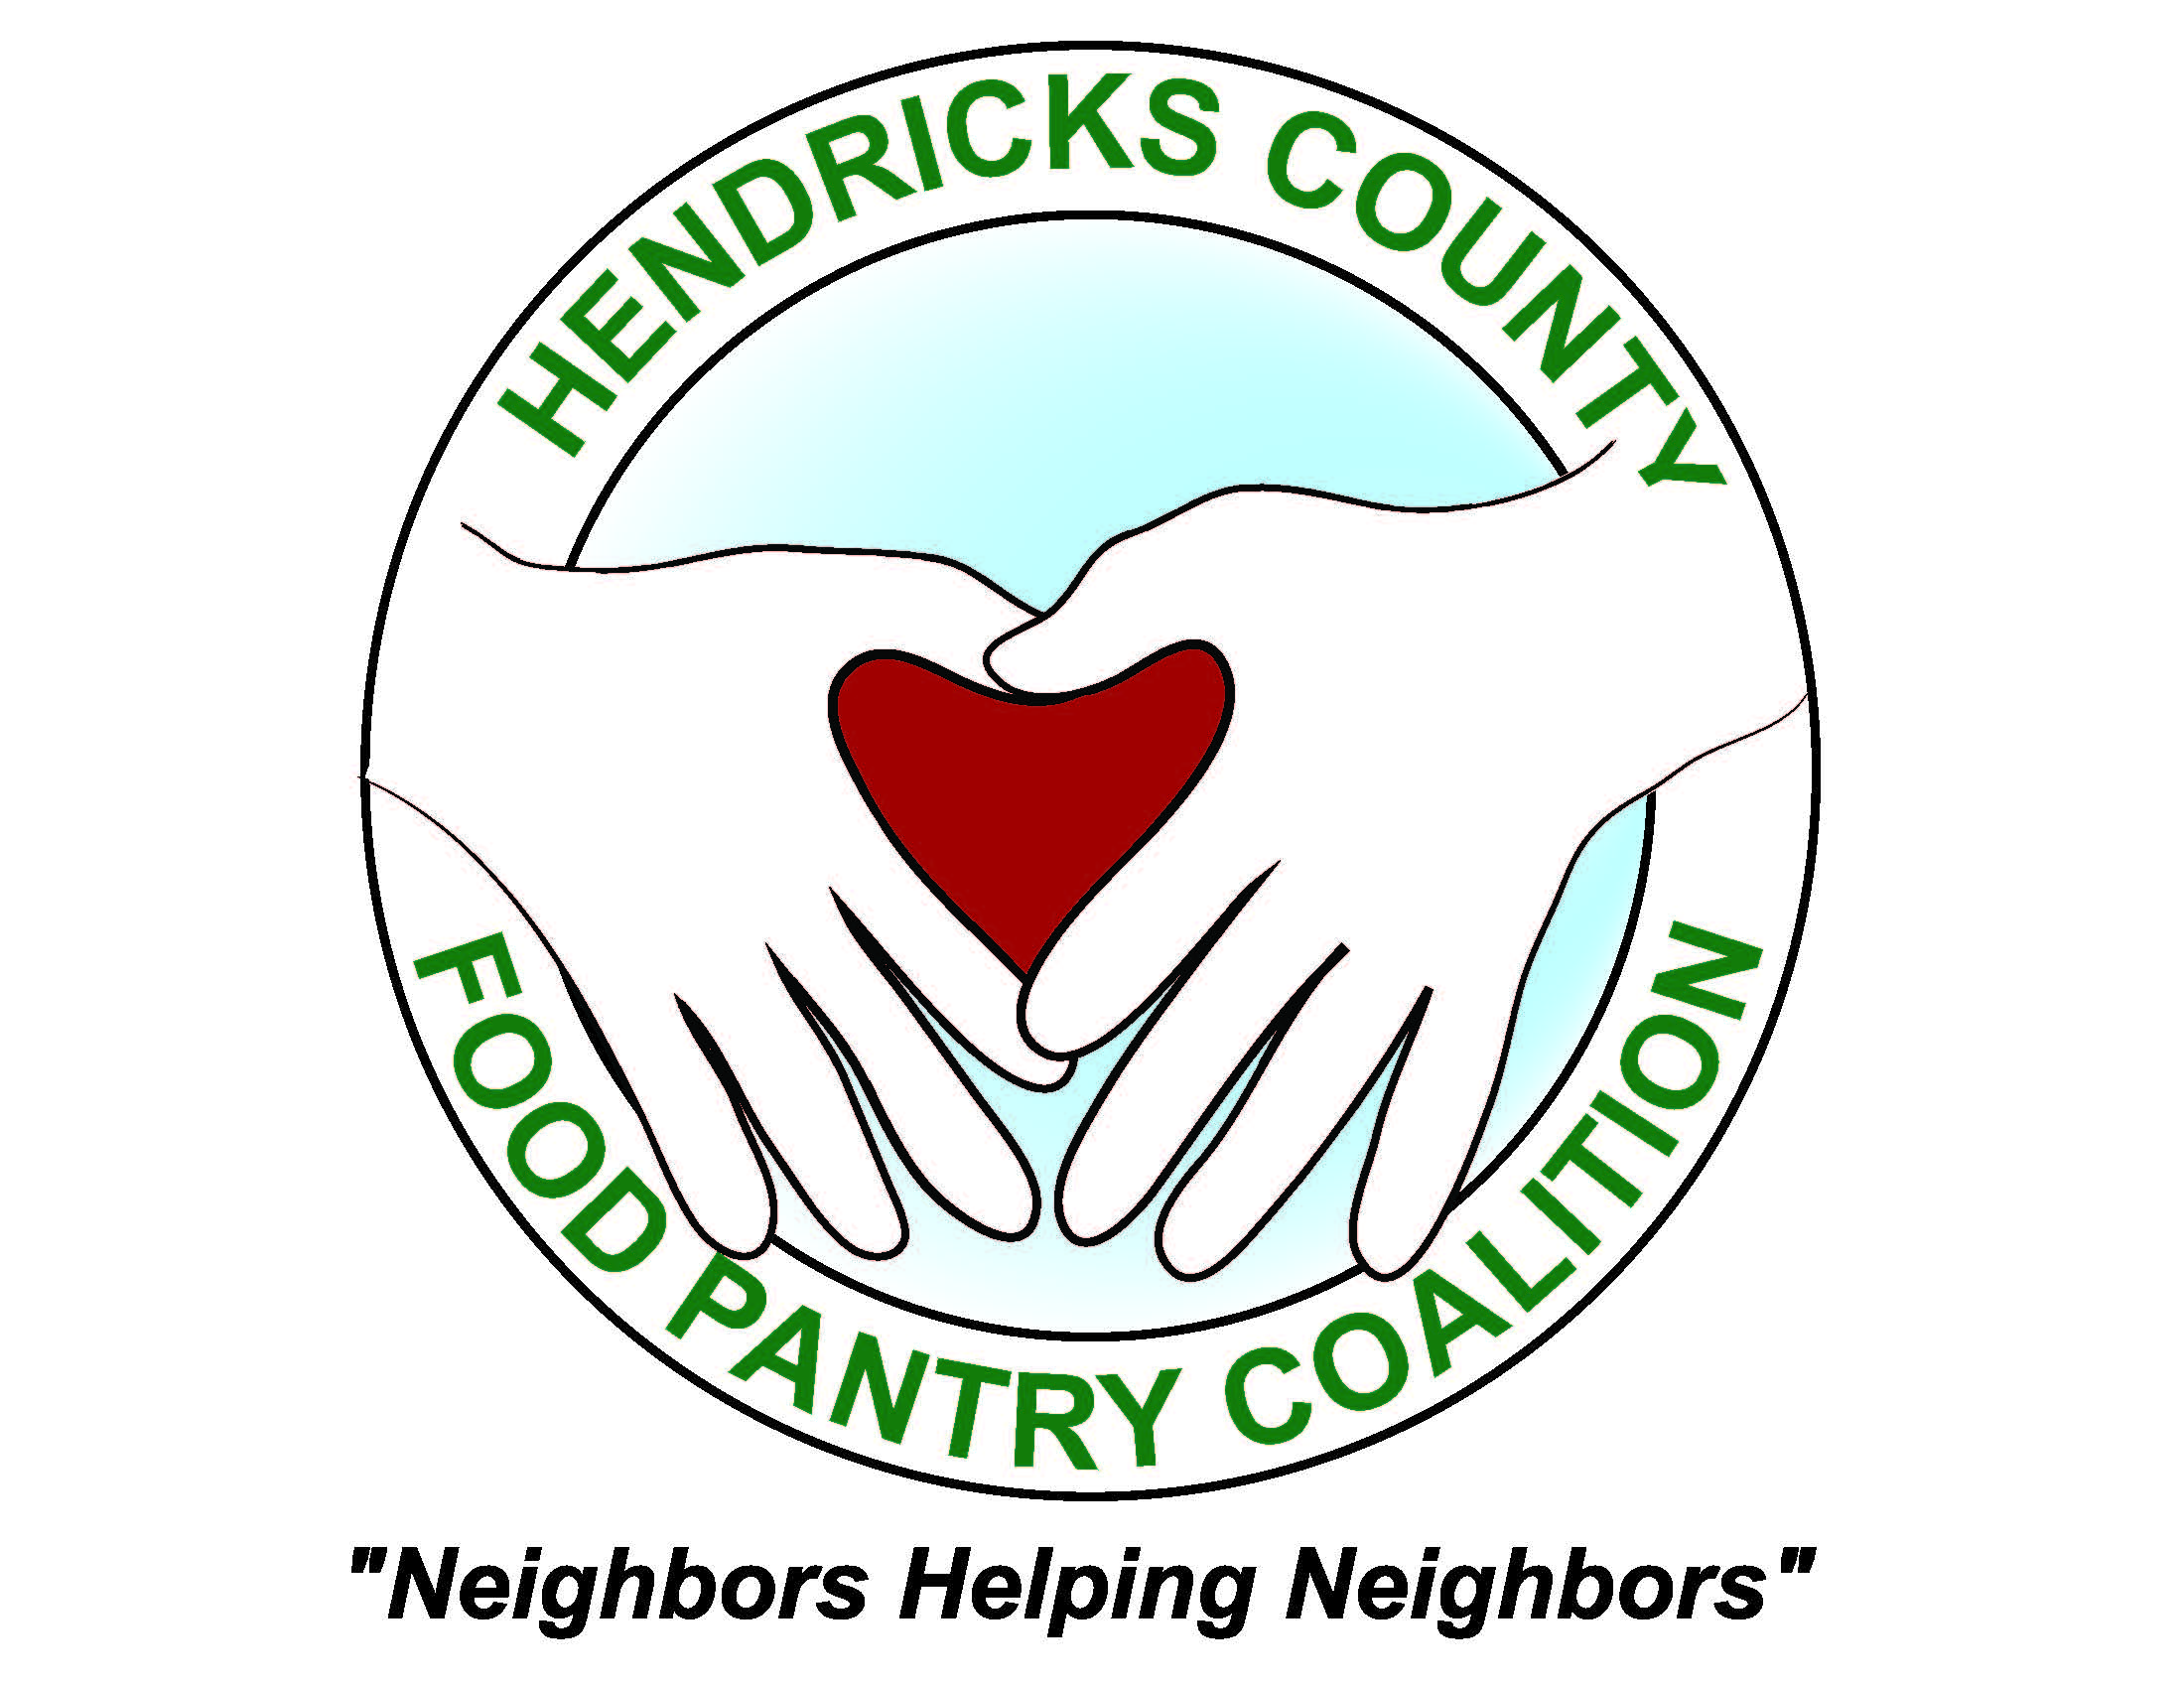 Hendricks County Food Pantry Coalition